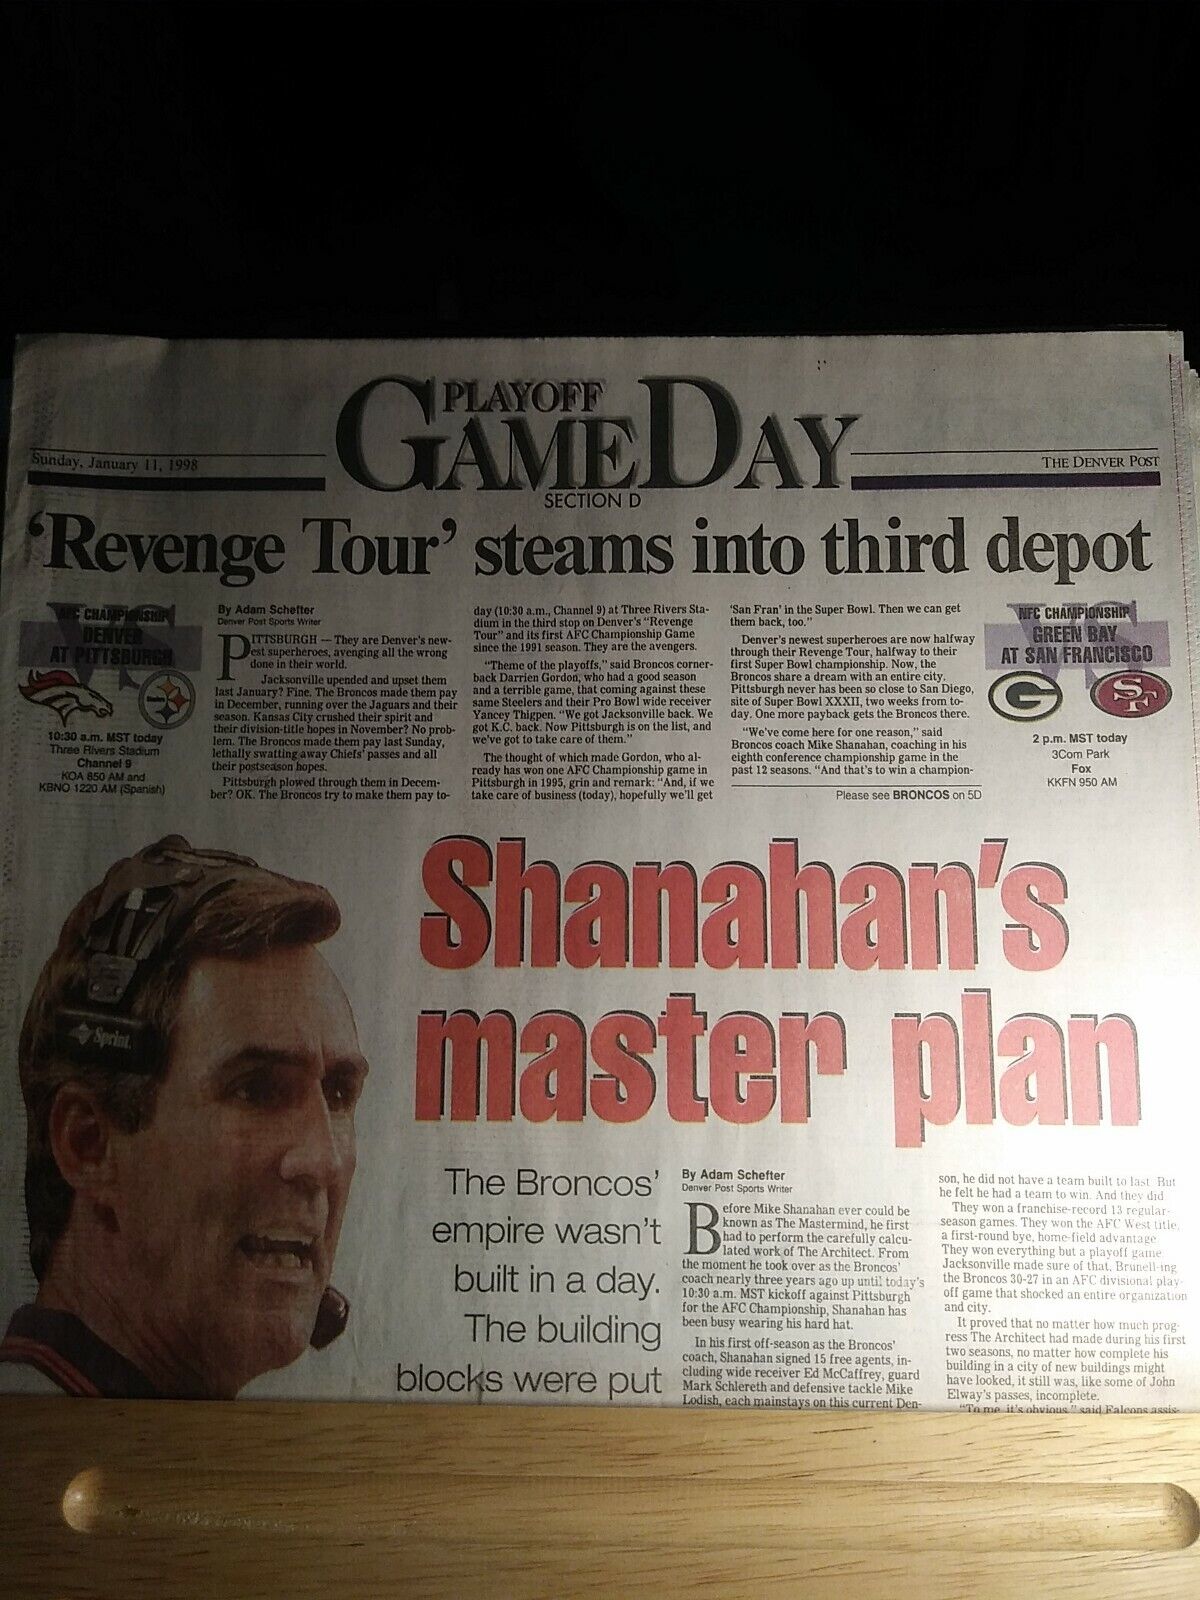 The Denver Post. Newspaper Jan. 11 1998 Playoff Gameday Denver Broncos